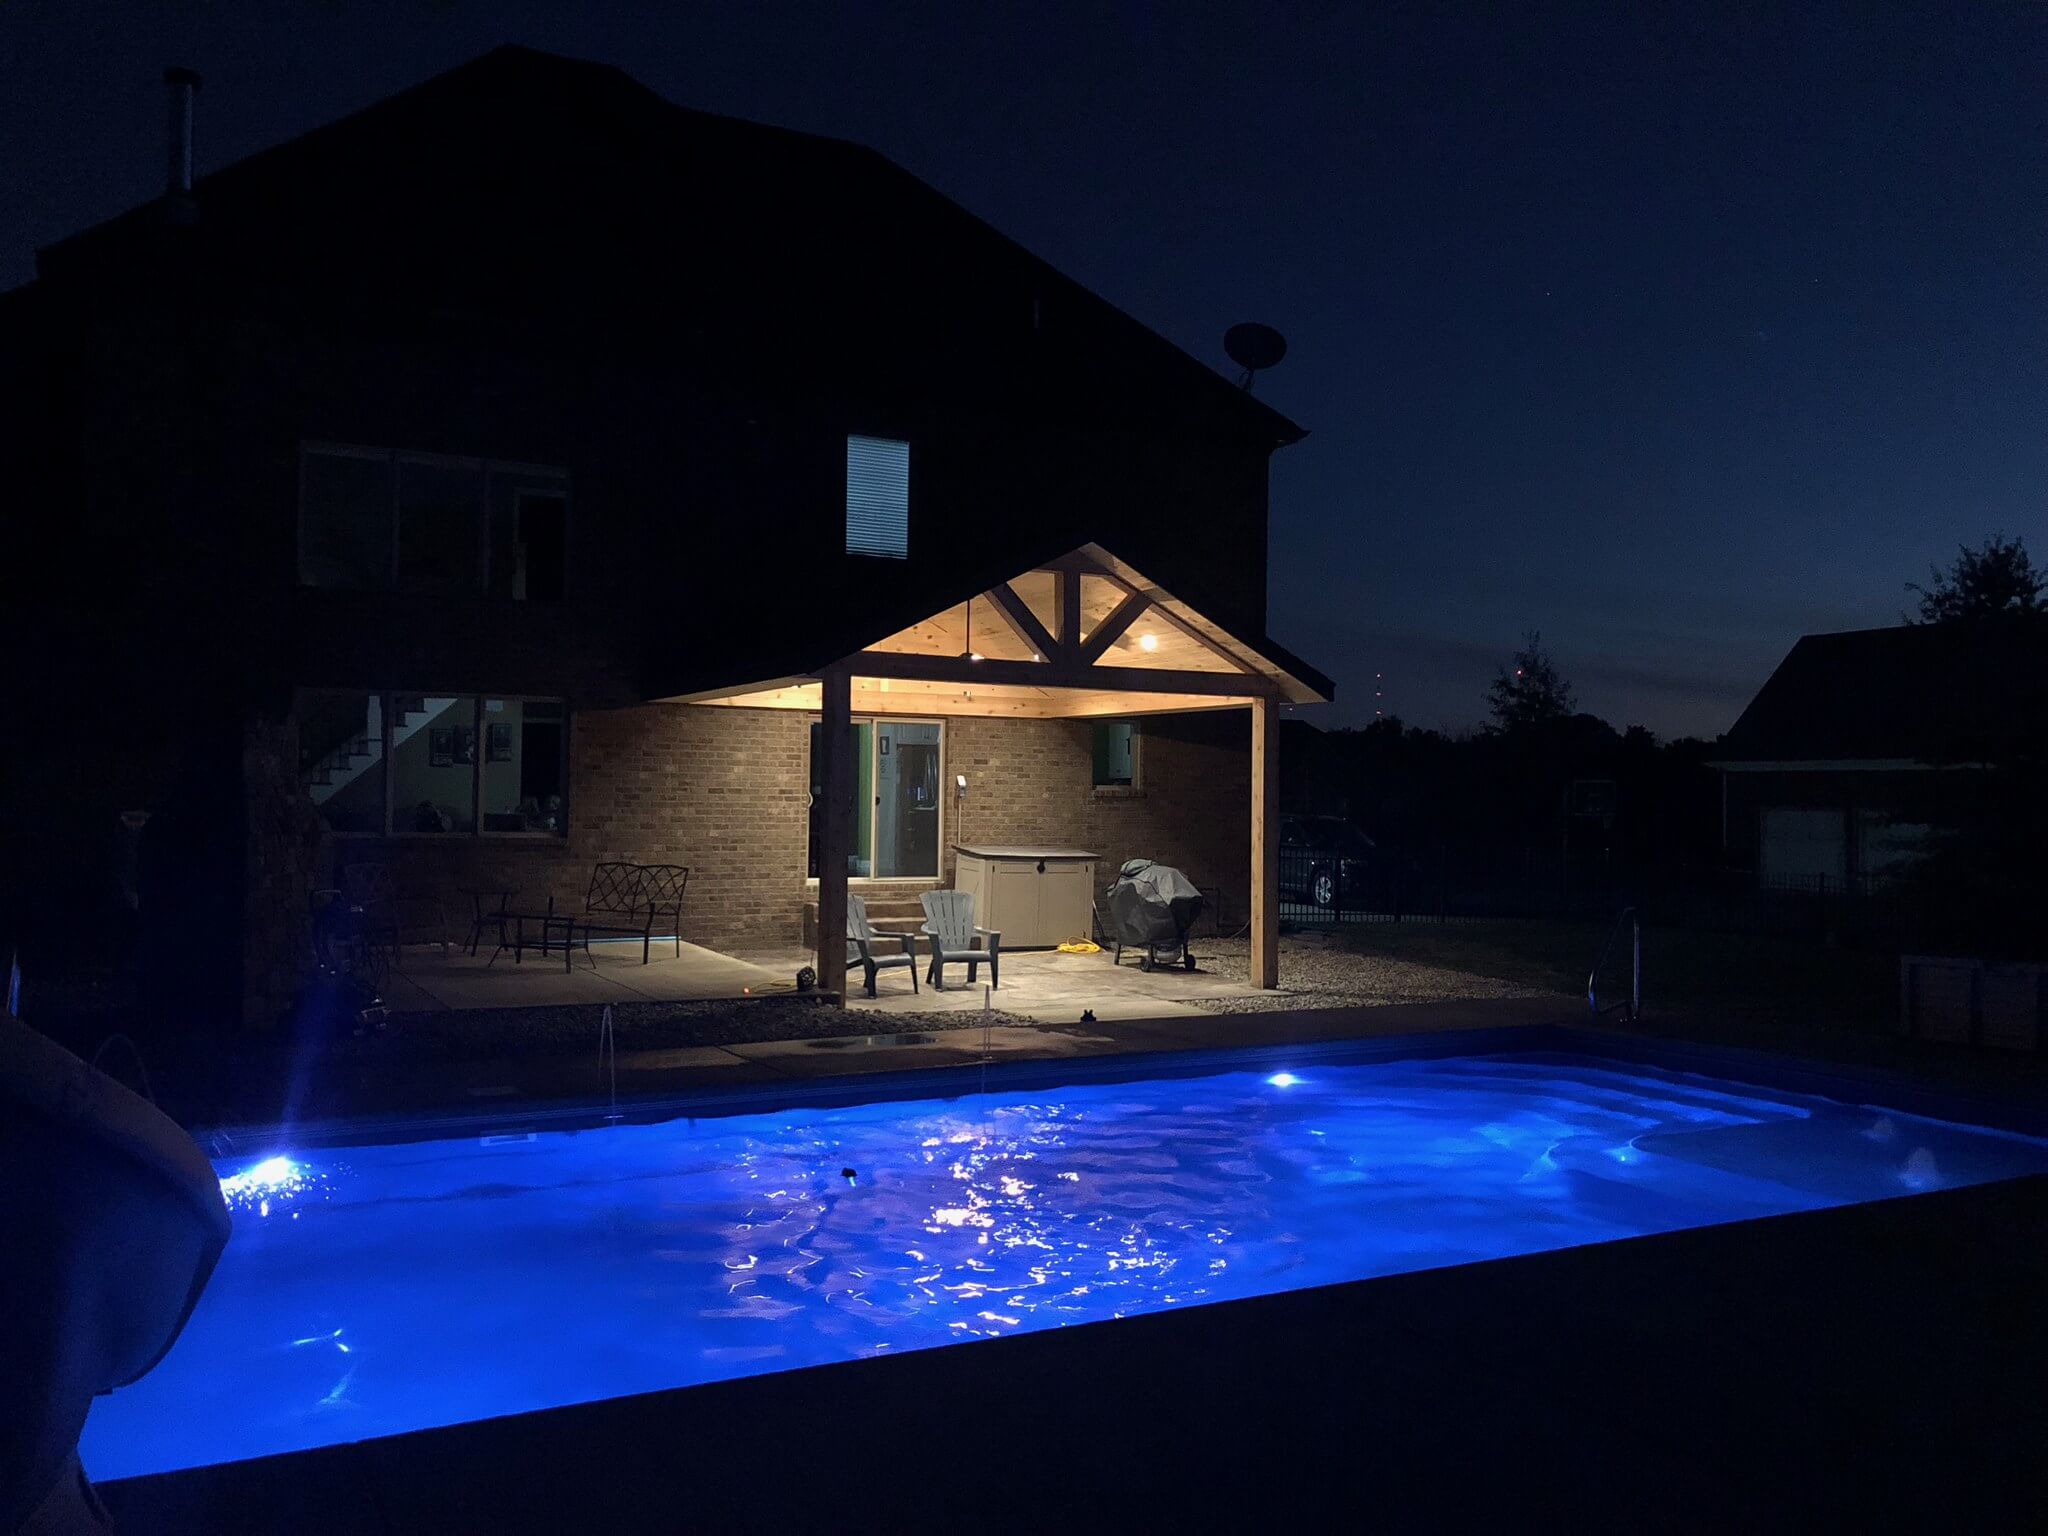 Bright blue pool lighting at night